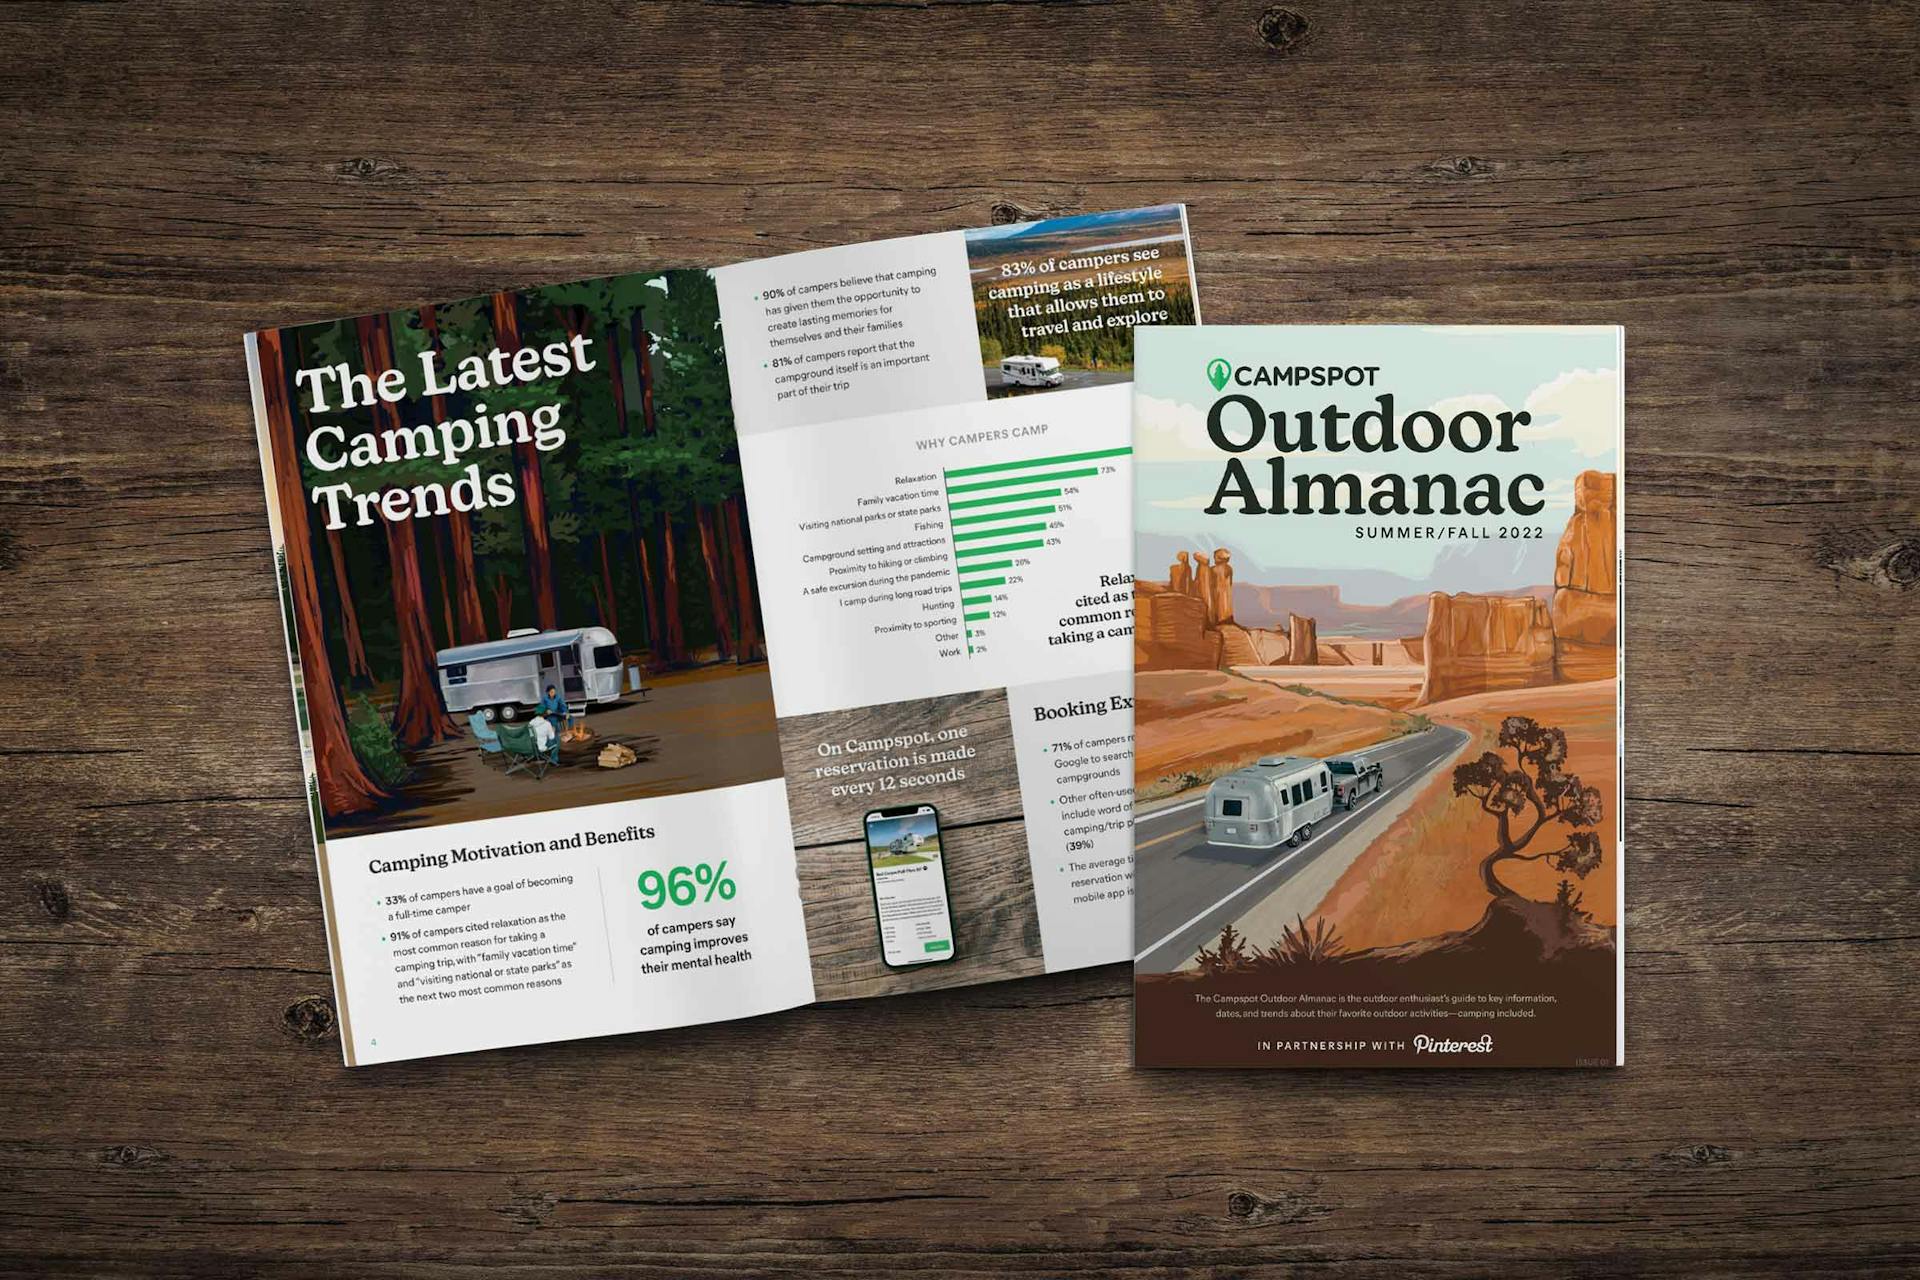 Introducing the Campspot Outdoor Almanac